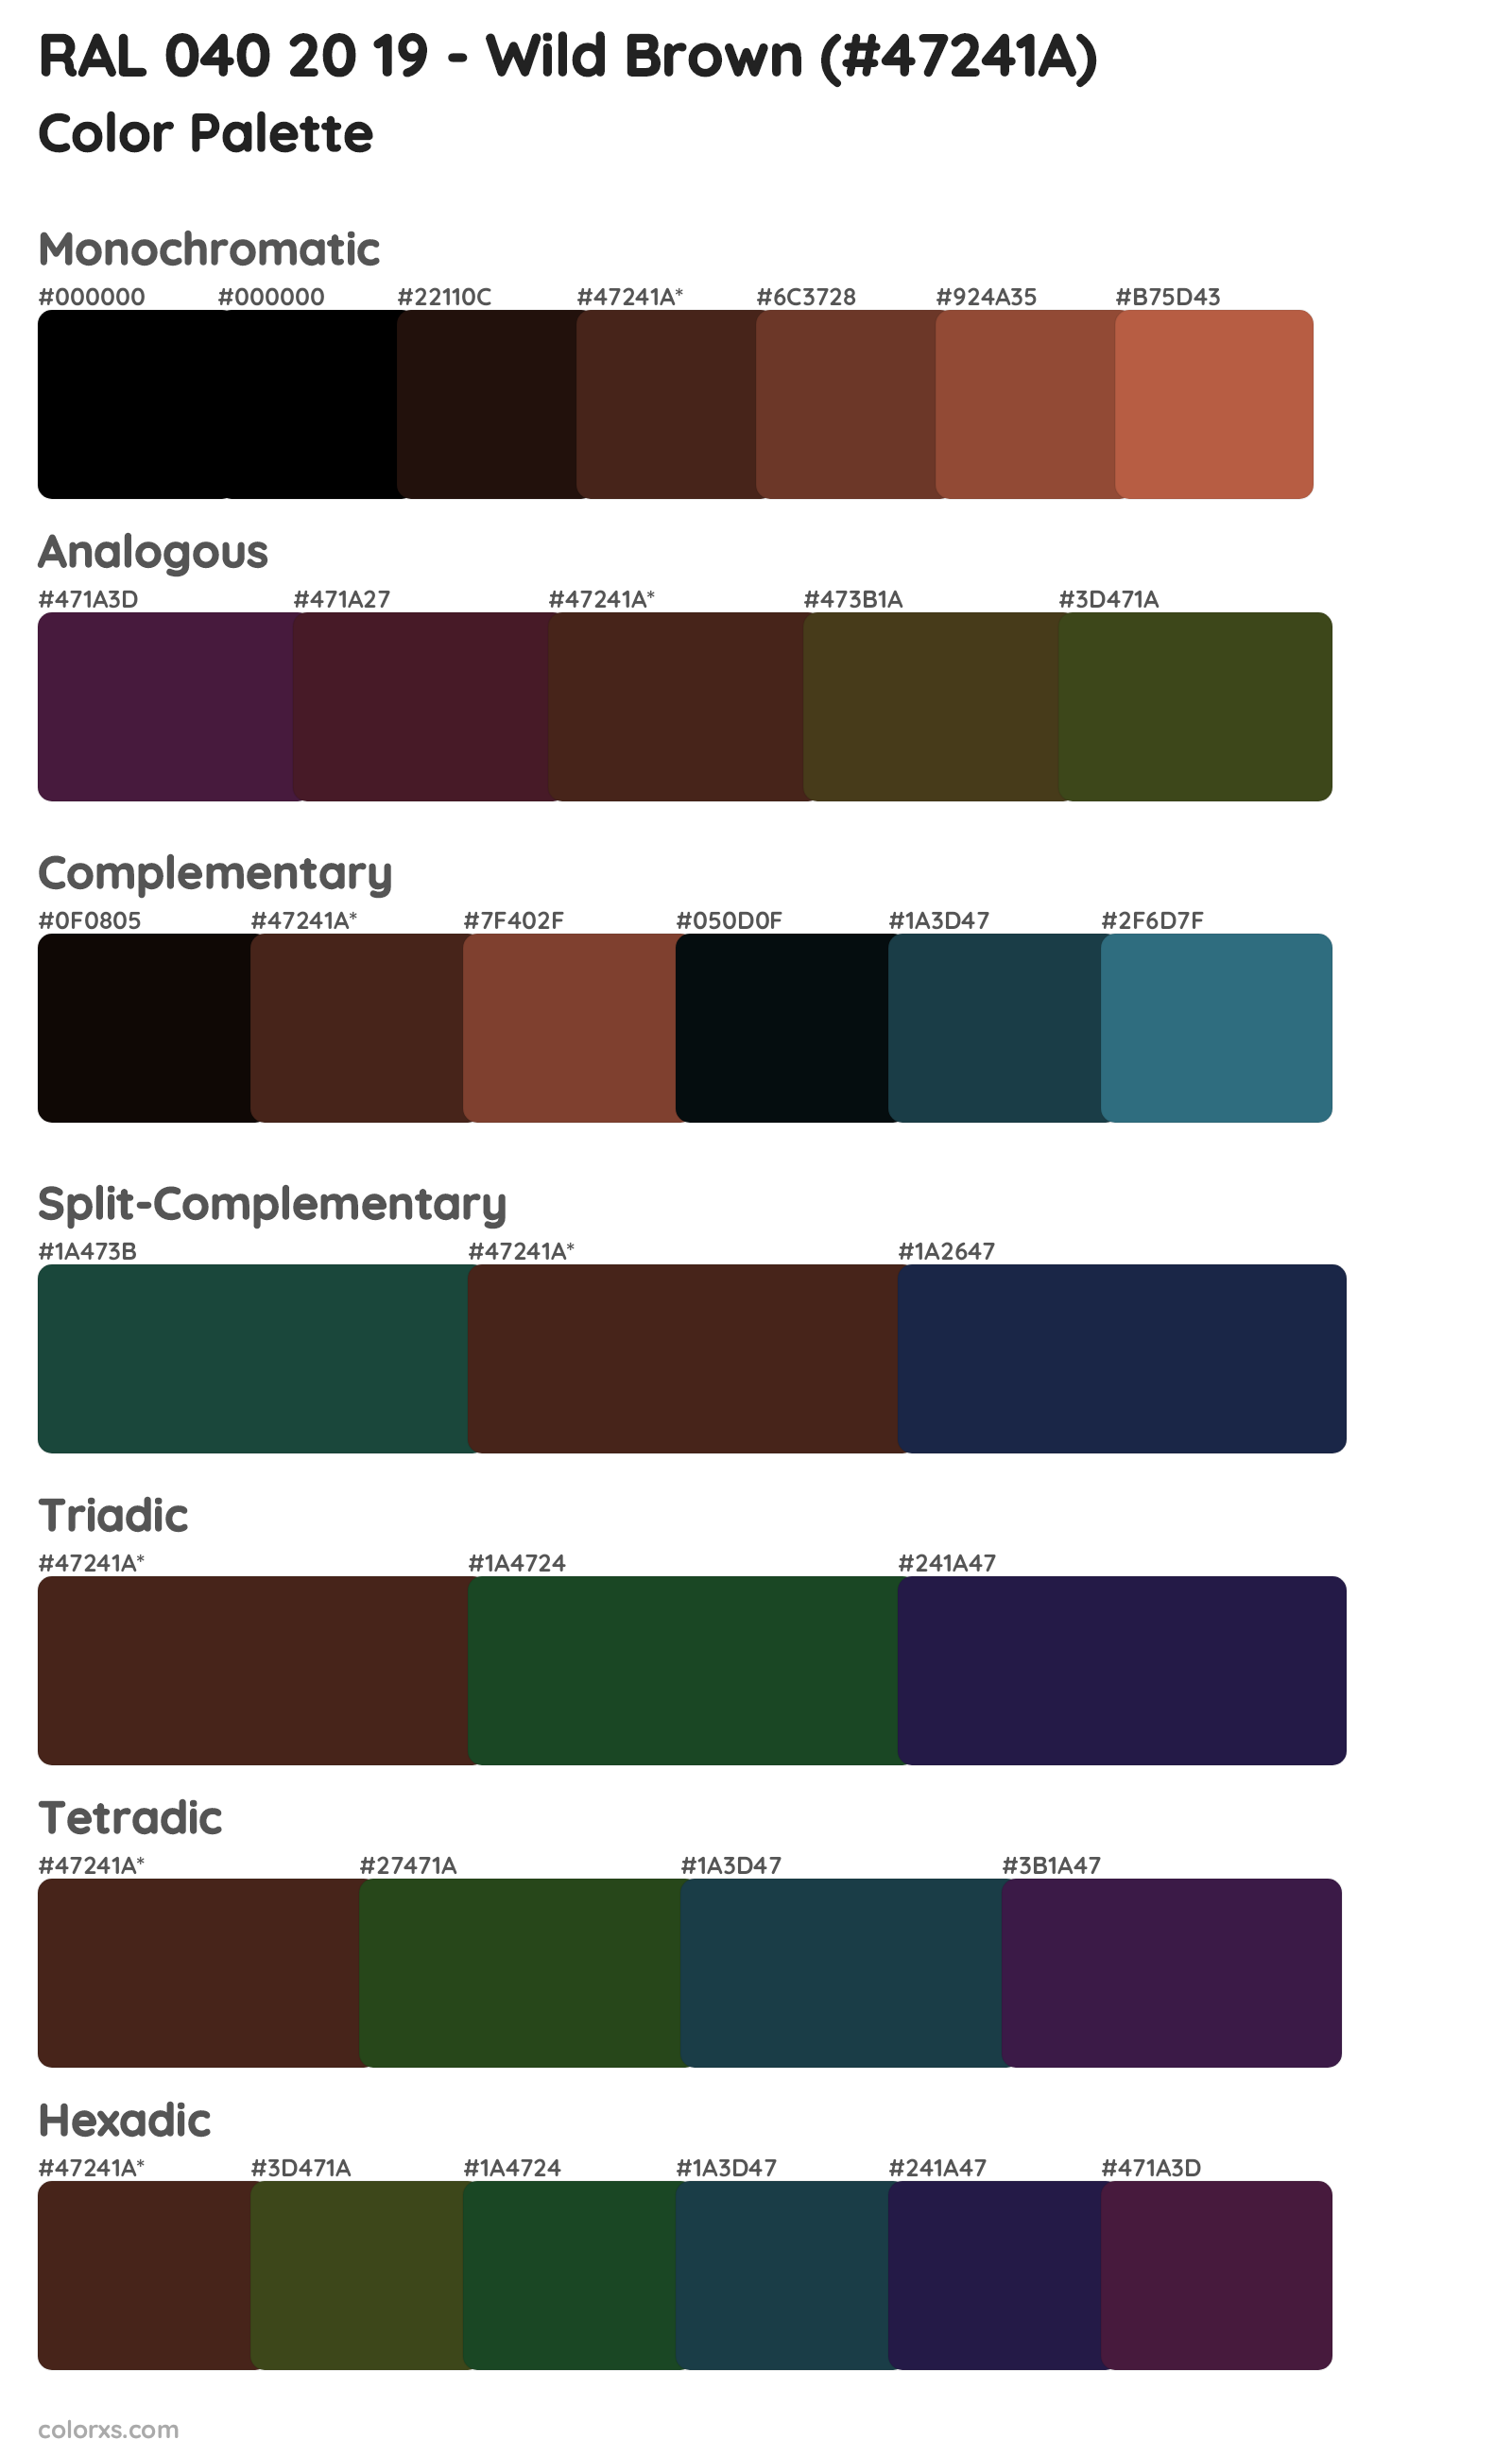 RAL 040 20 19 - Wild Brown Color Scheme Palettes